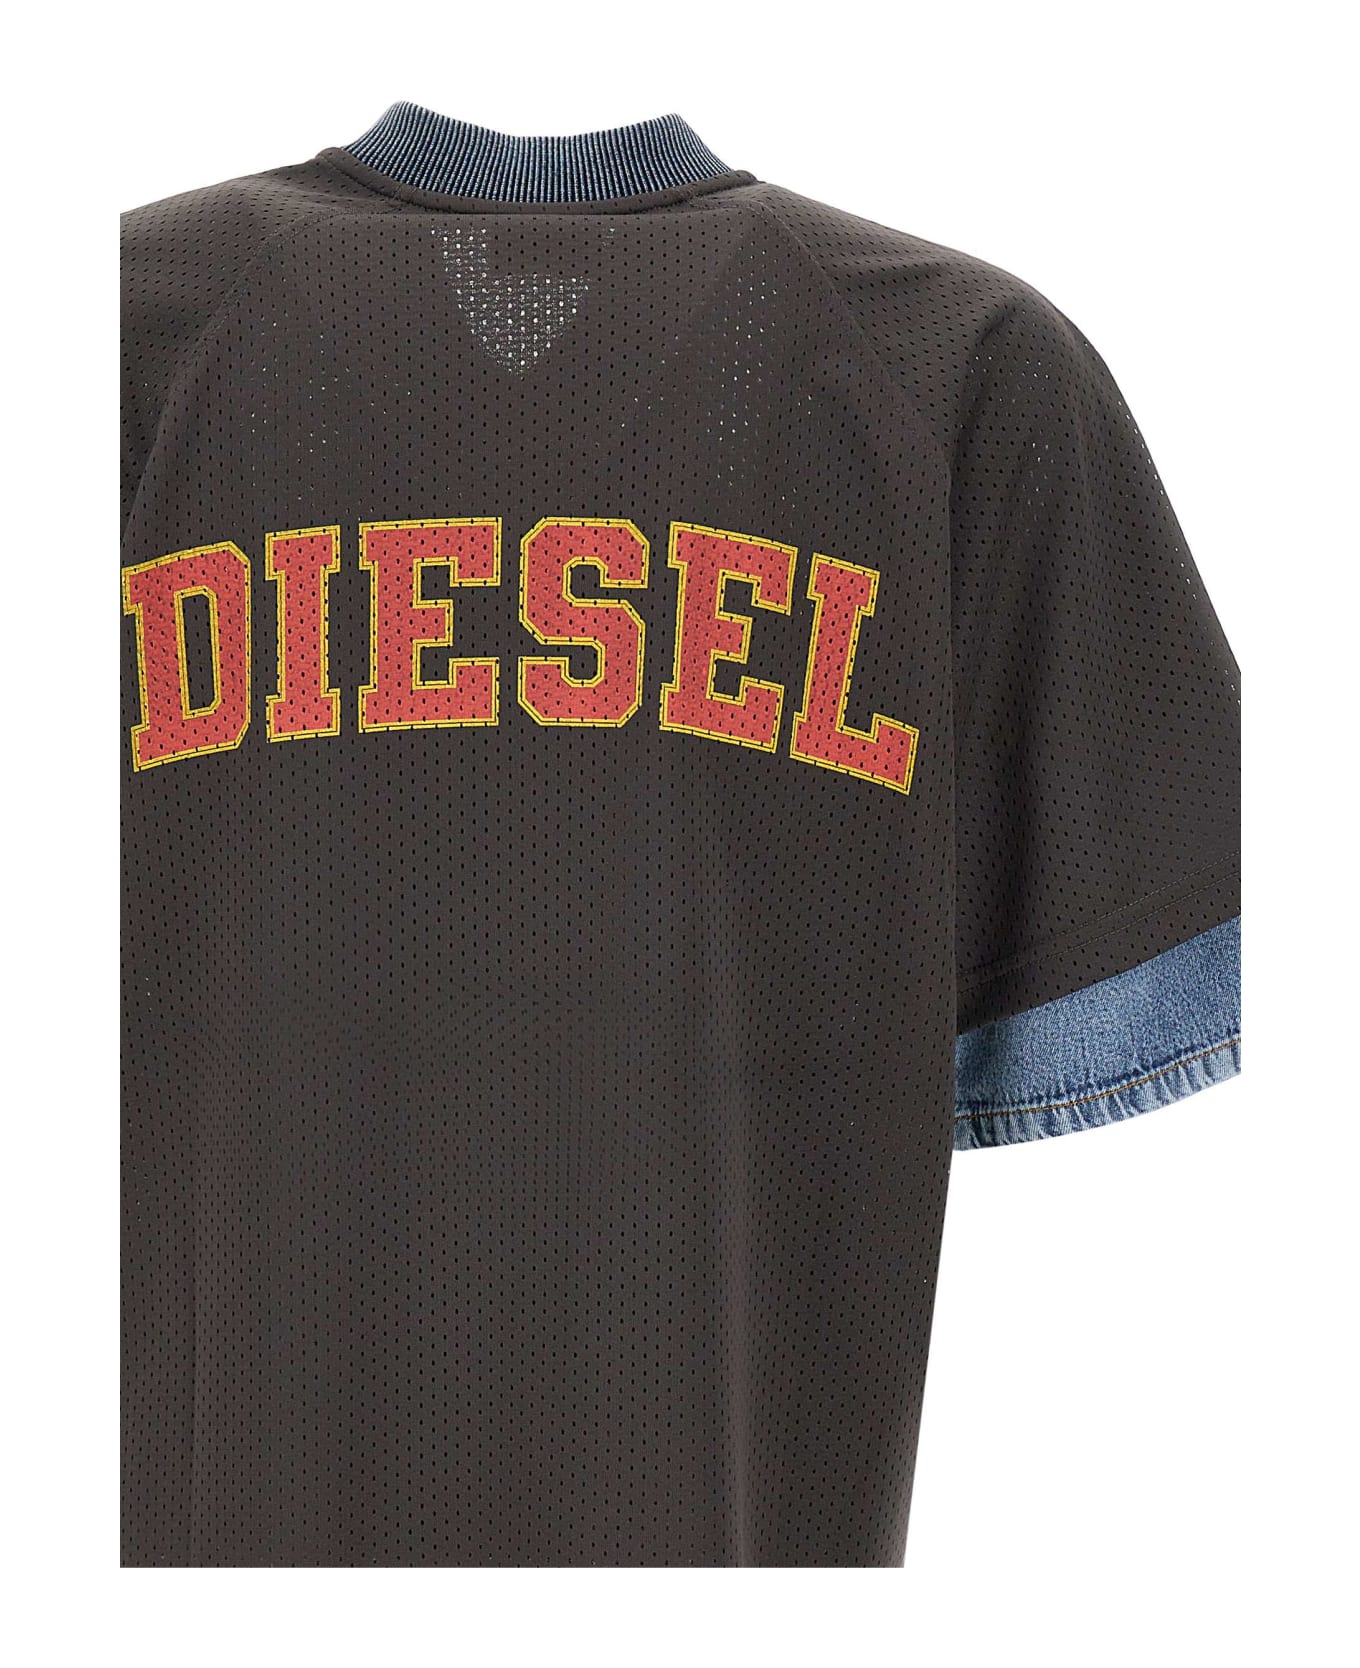 Diesel "t-voxt" T-shirt - GREY